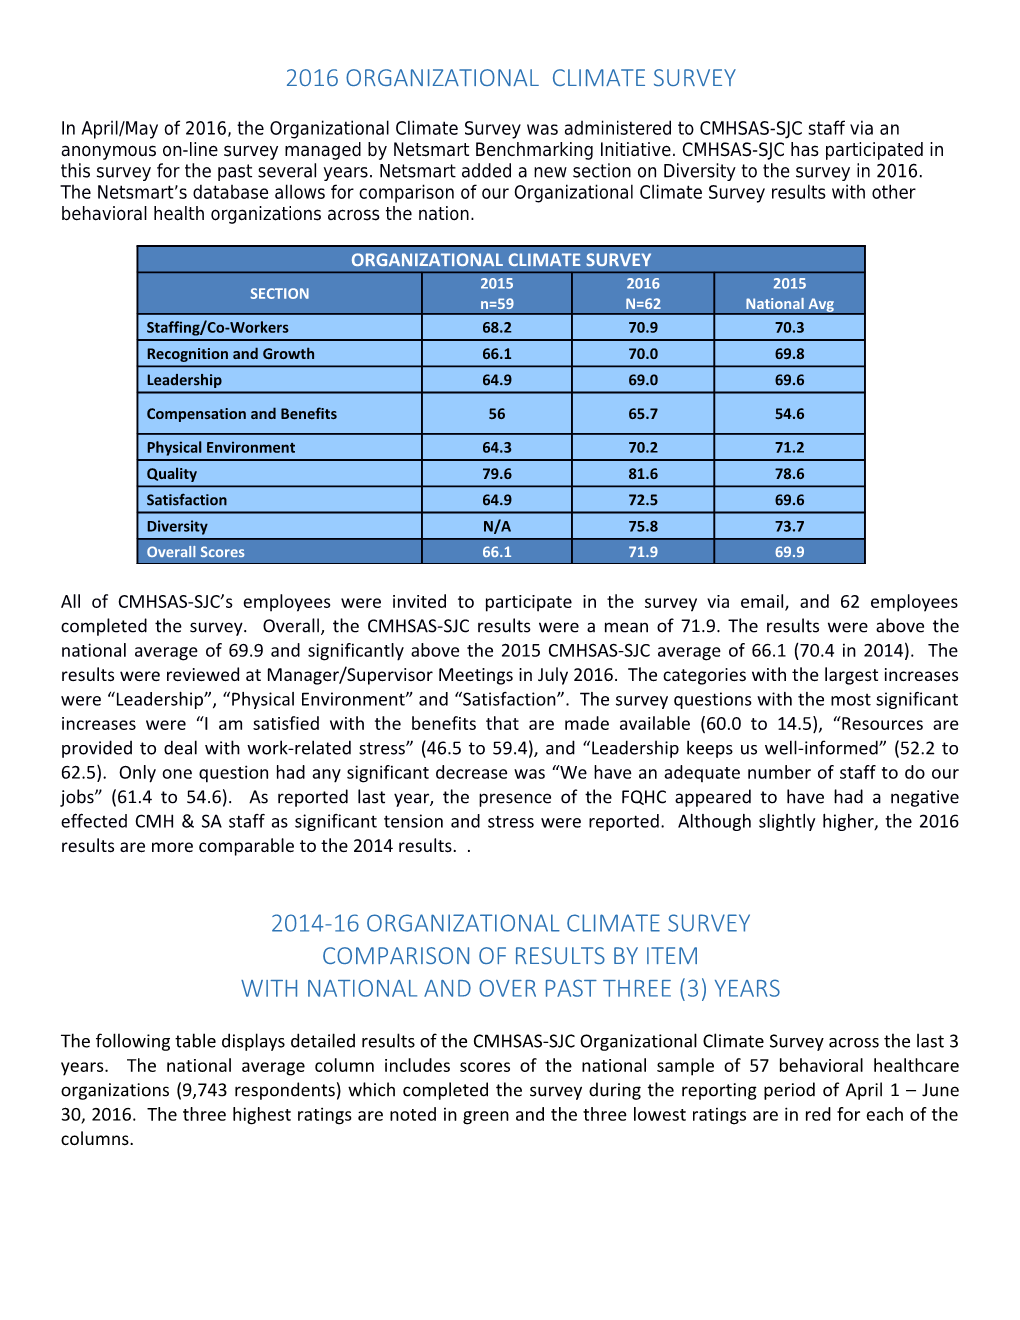 2016 Organizational Climate Survey